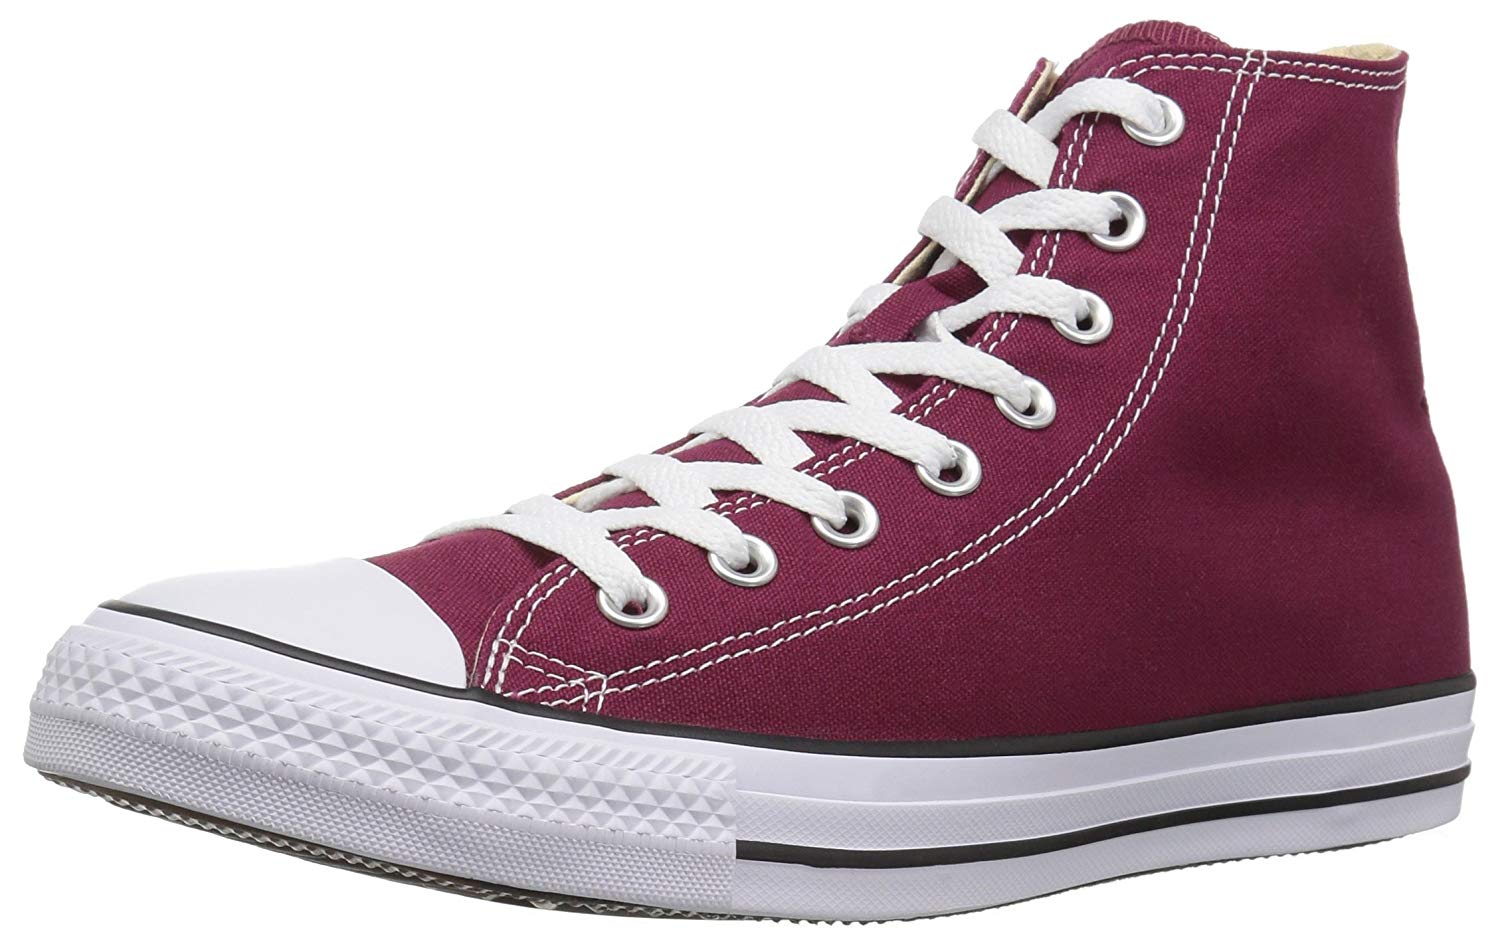 Converse-Chuck-Taylor-All-Star-High-Top-Sneaker